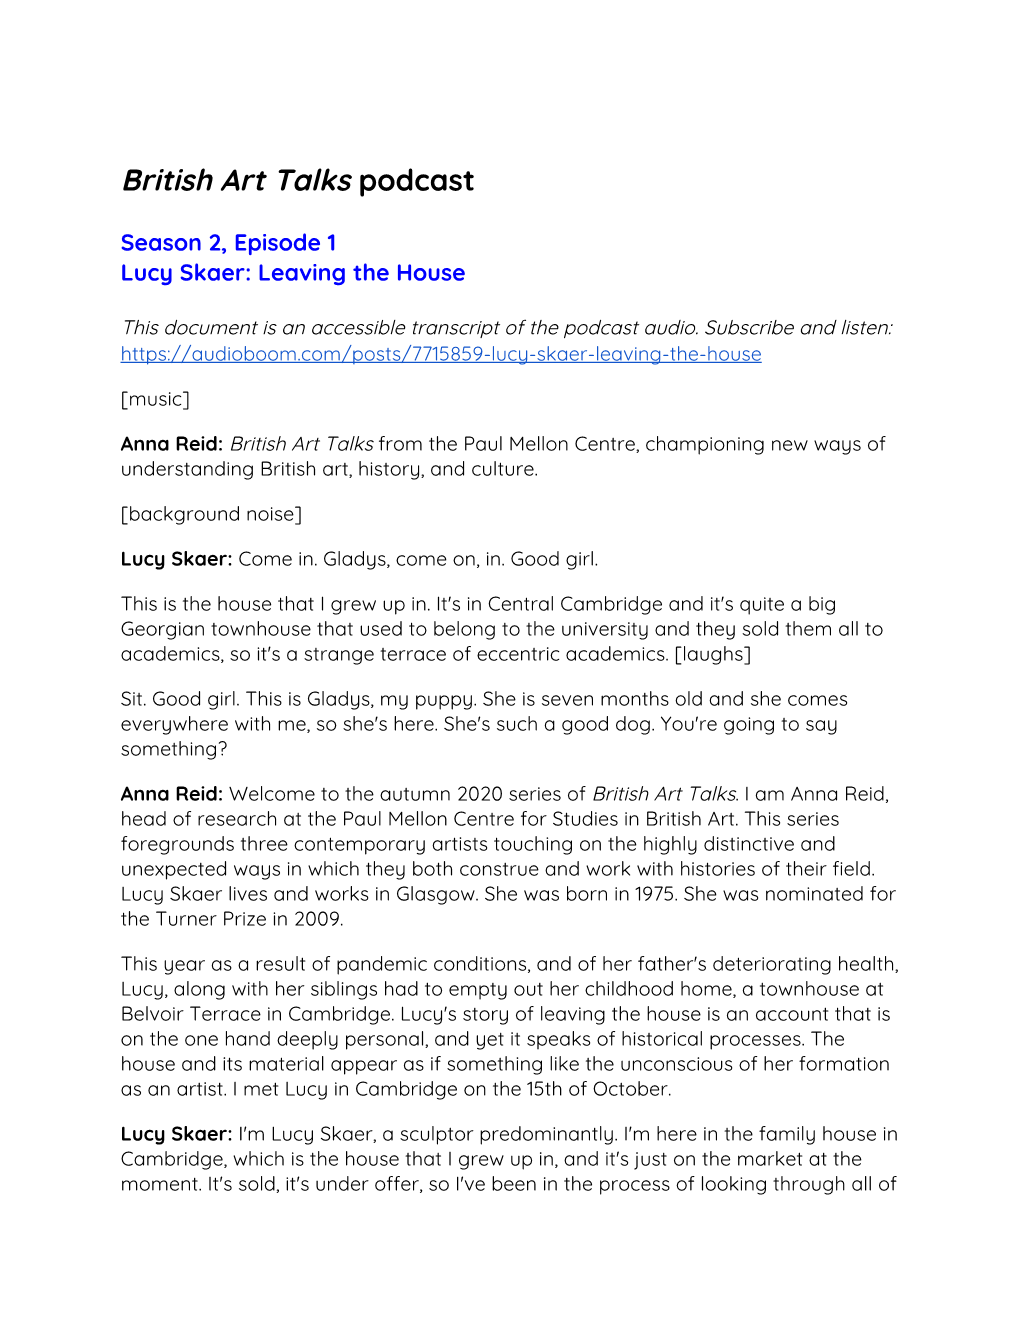 Transcript of the Podcast Audio